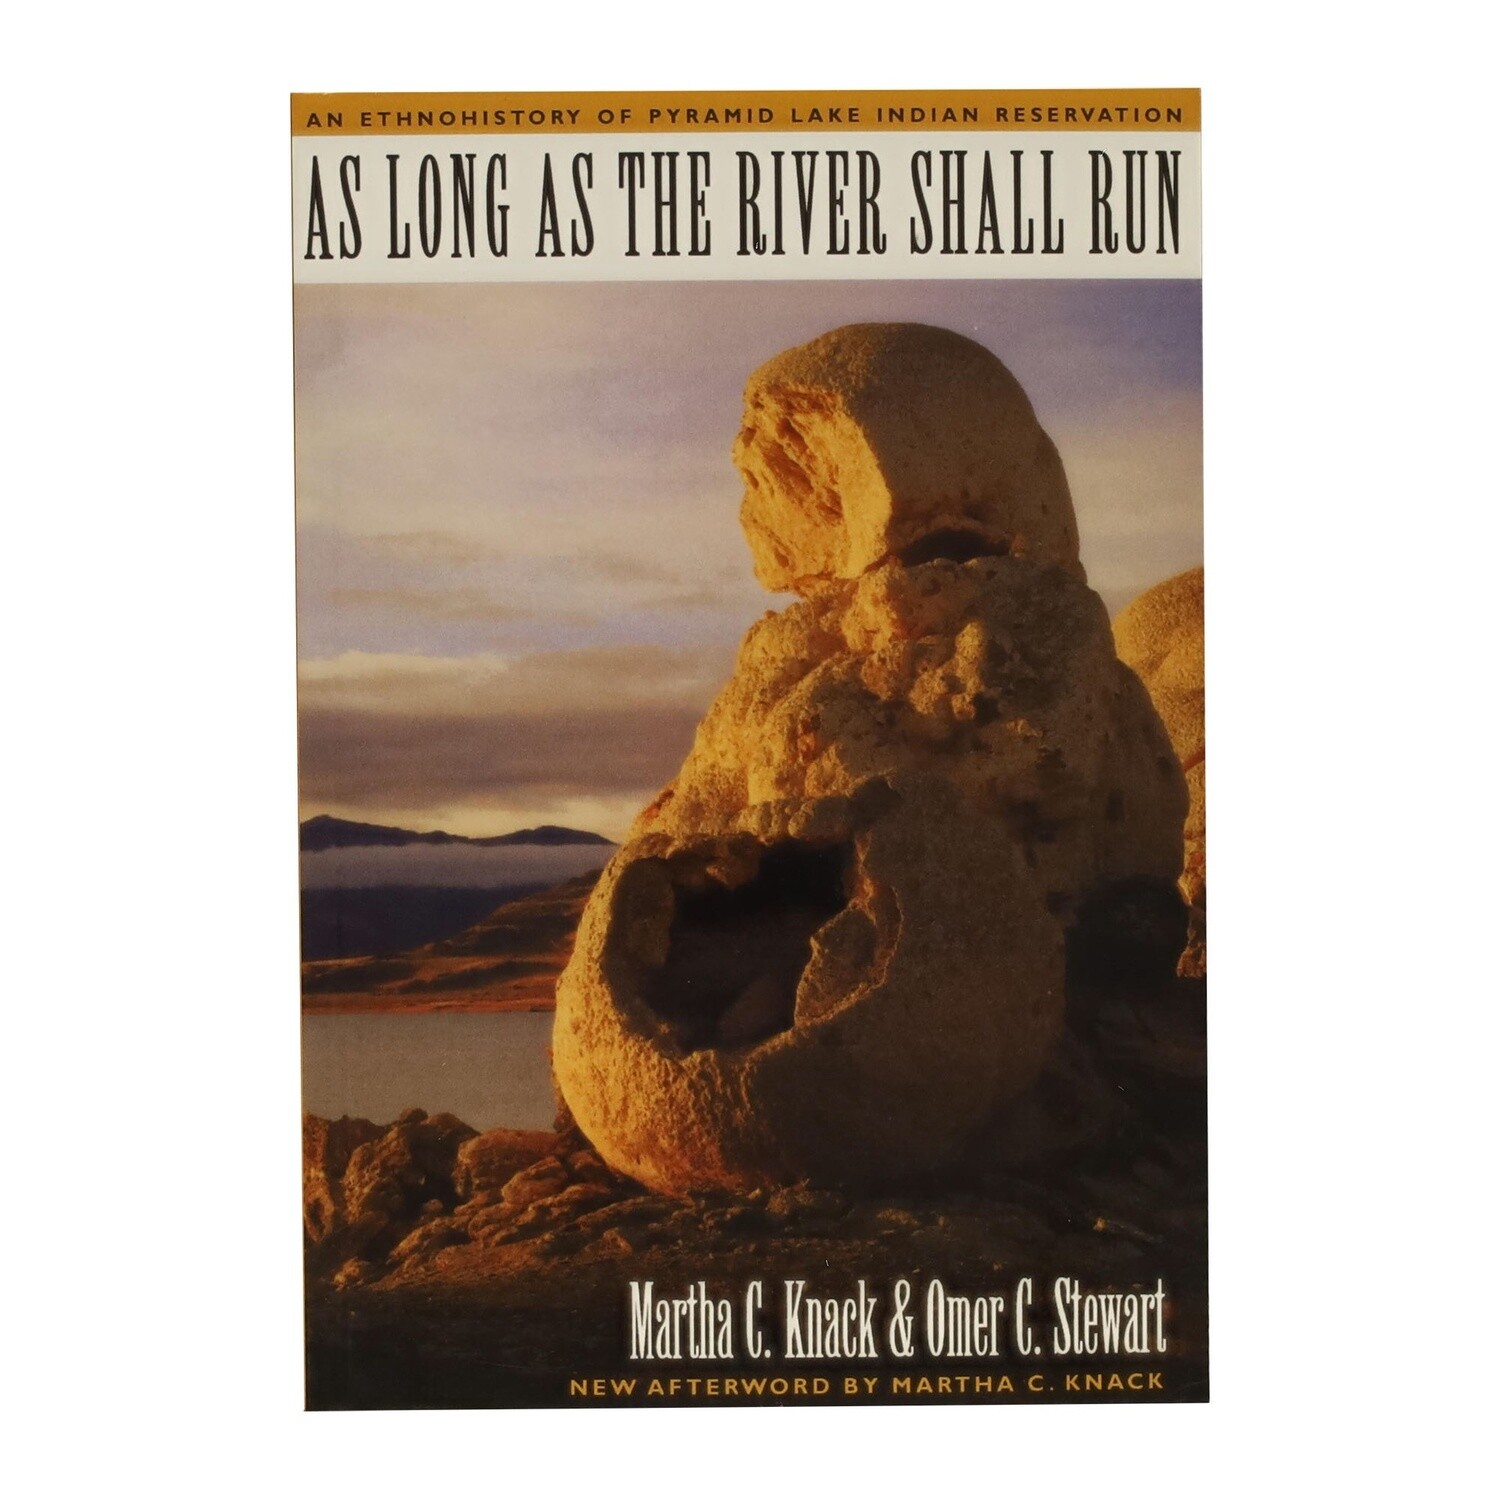 As Long as the River Shall Run by Martha C. Knack & Omer C. Stewart